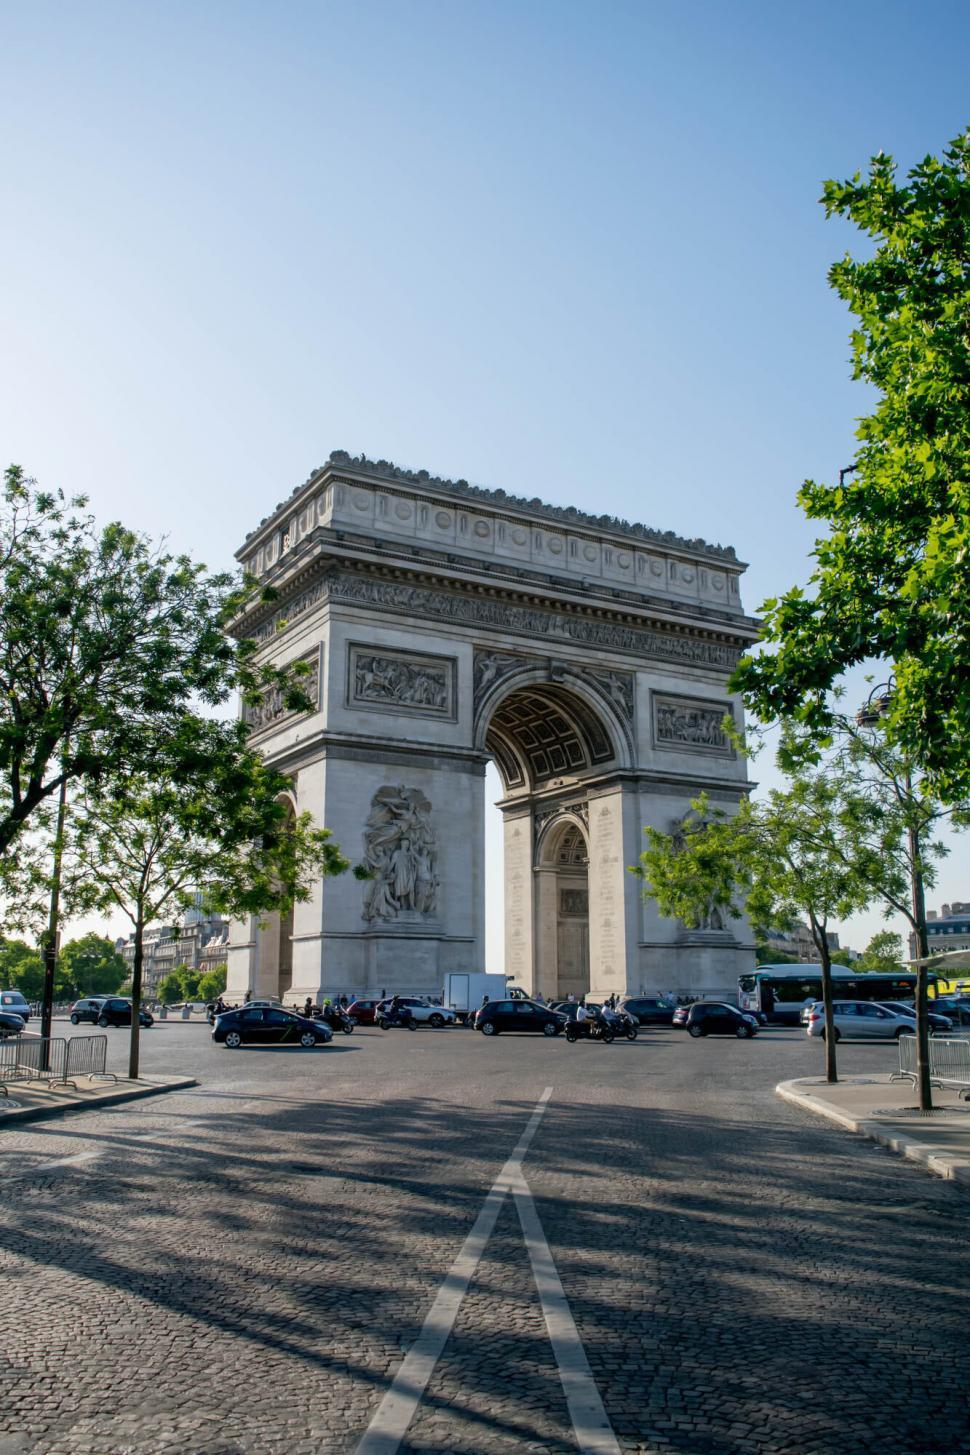 Free Image of Arc de Triomphe on Parisian boulevard 